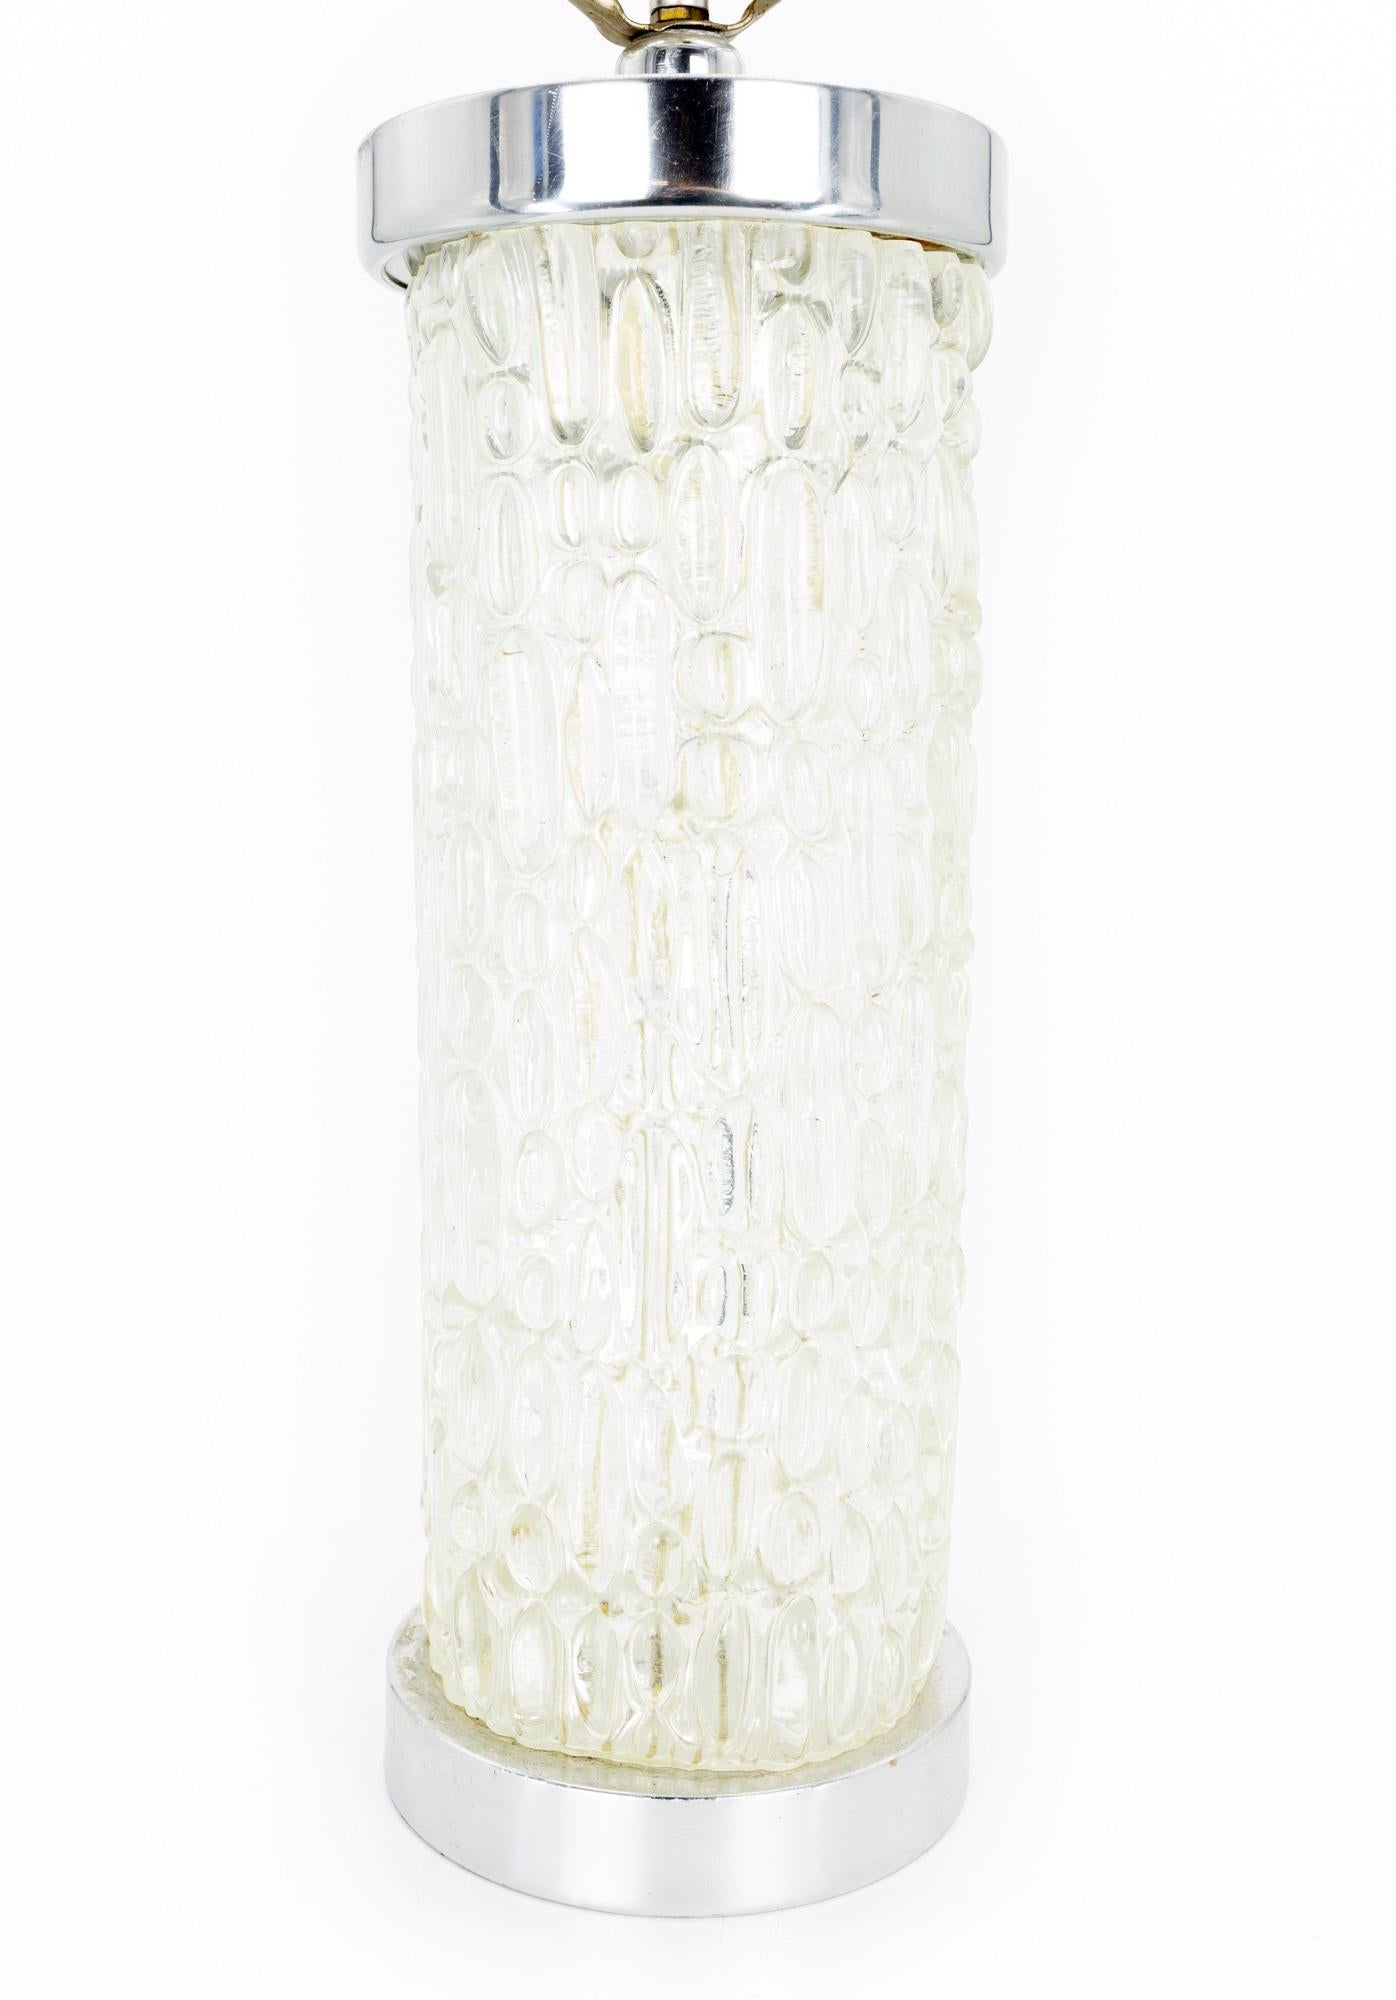 Timo Sarpaneva Iittala Festivo Style Mid Century Glass & Chrome Table Lamp For Sale 3